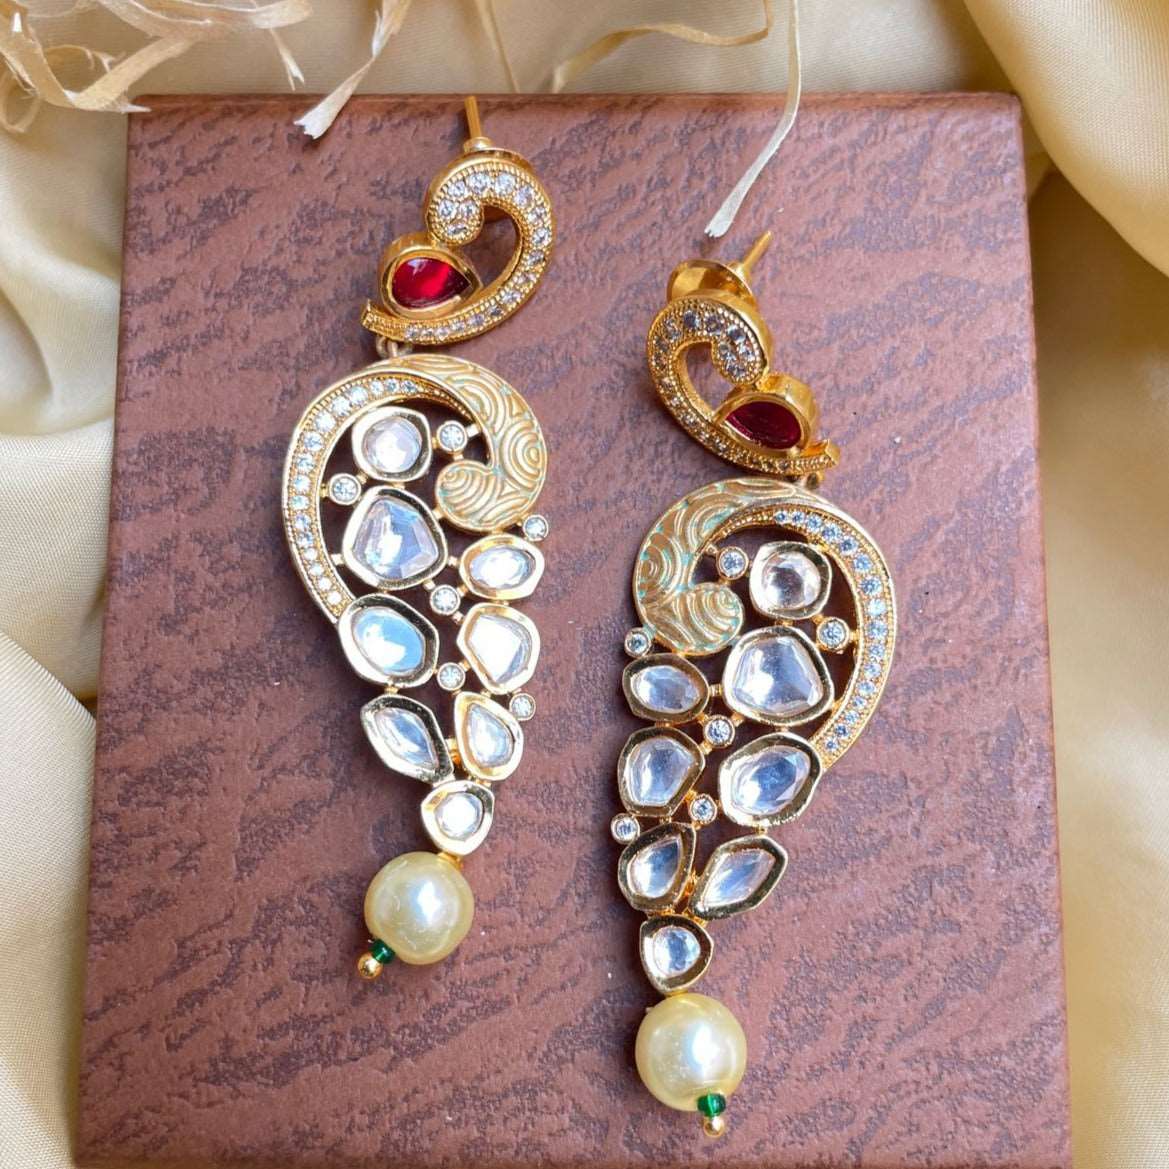 Antique gold kundan earrings - Indian Jewellery Designs